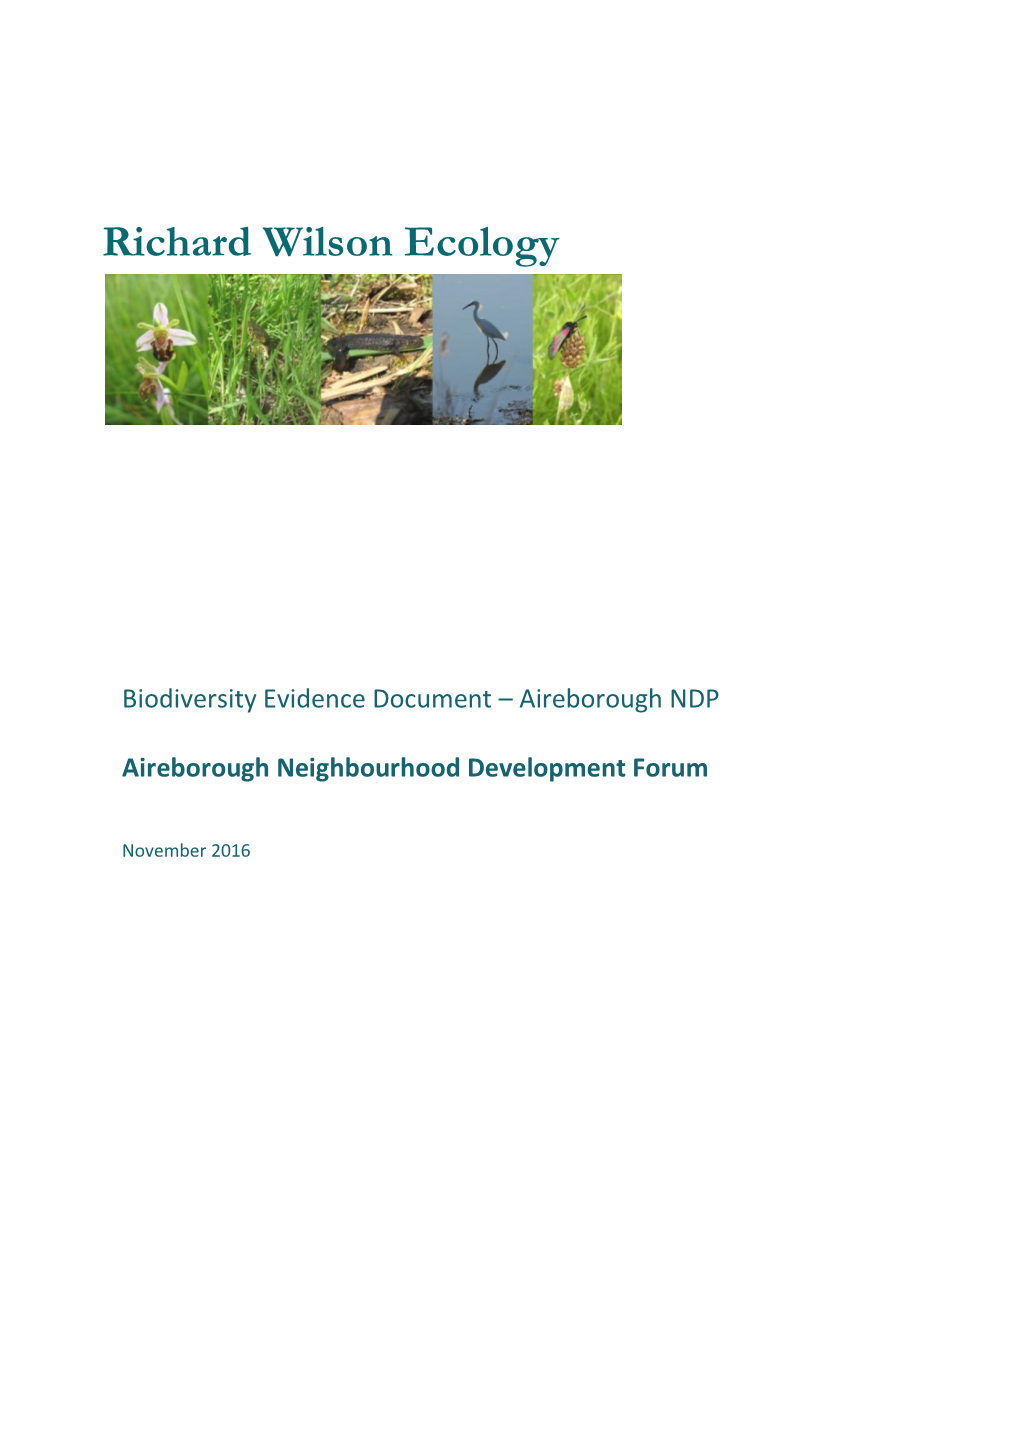 Richard Wilson Ecology